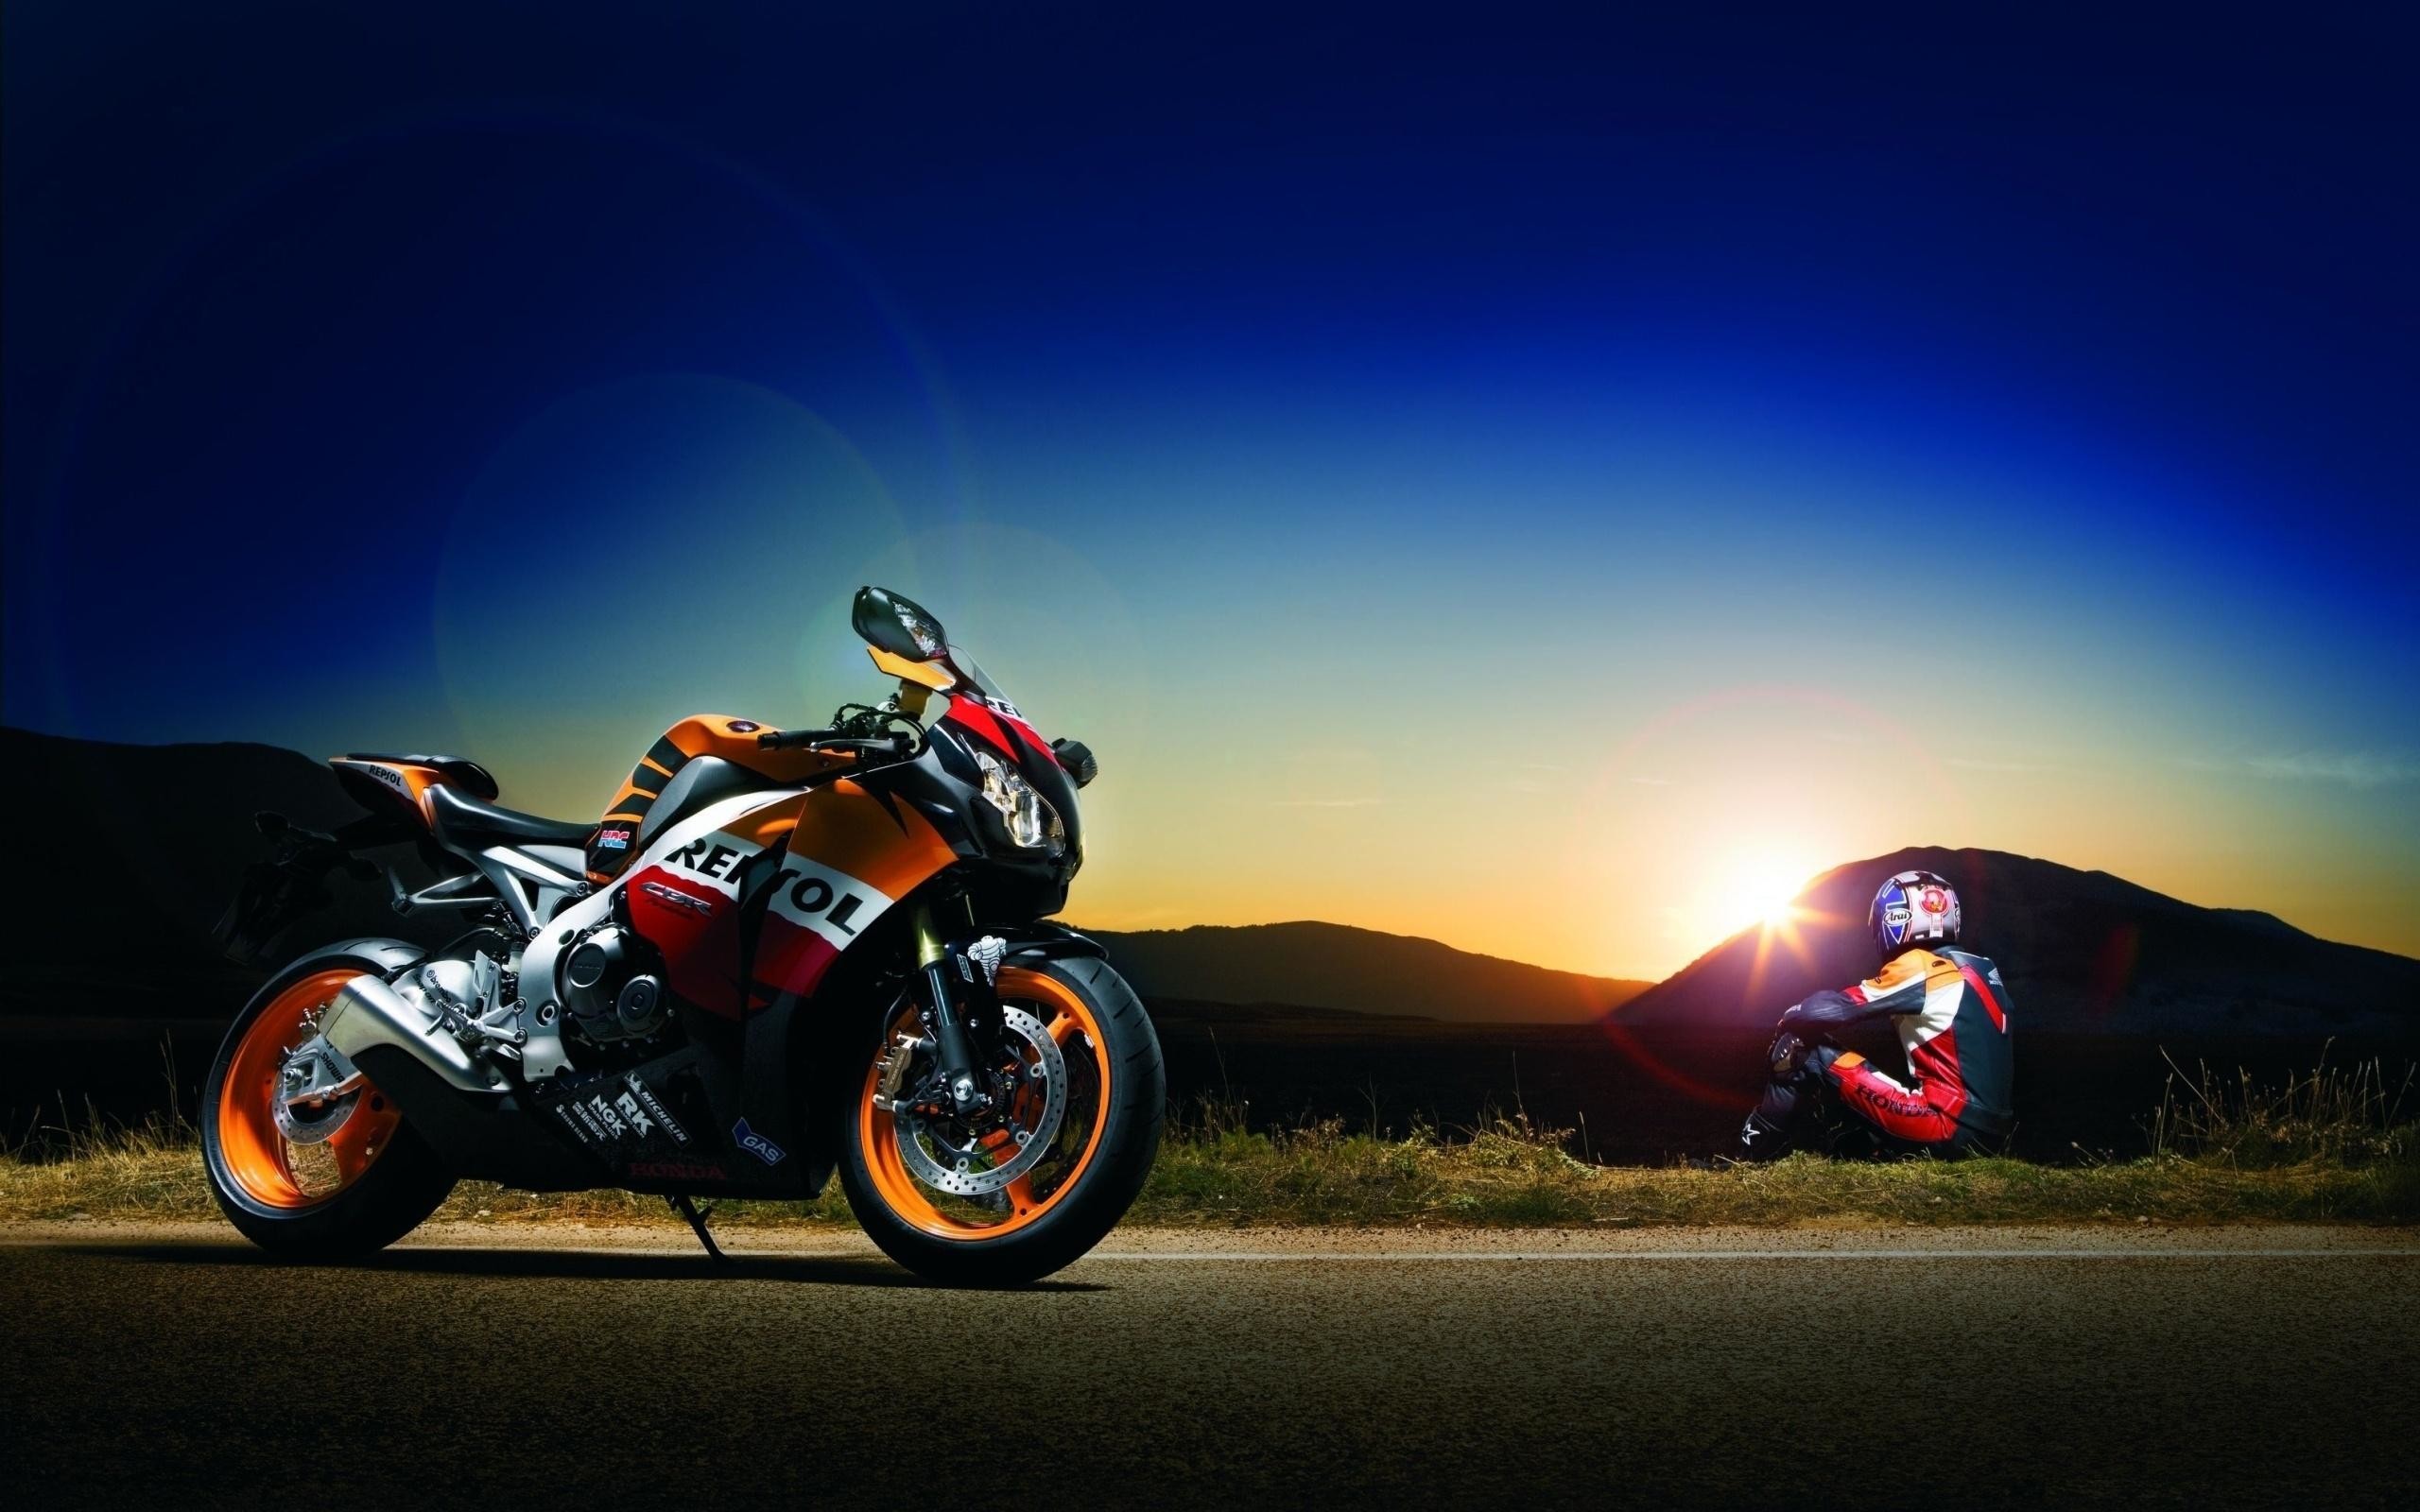 2560x1600 Honda-motorcycle-wallpaper-desktop